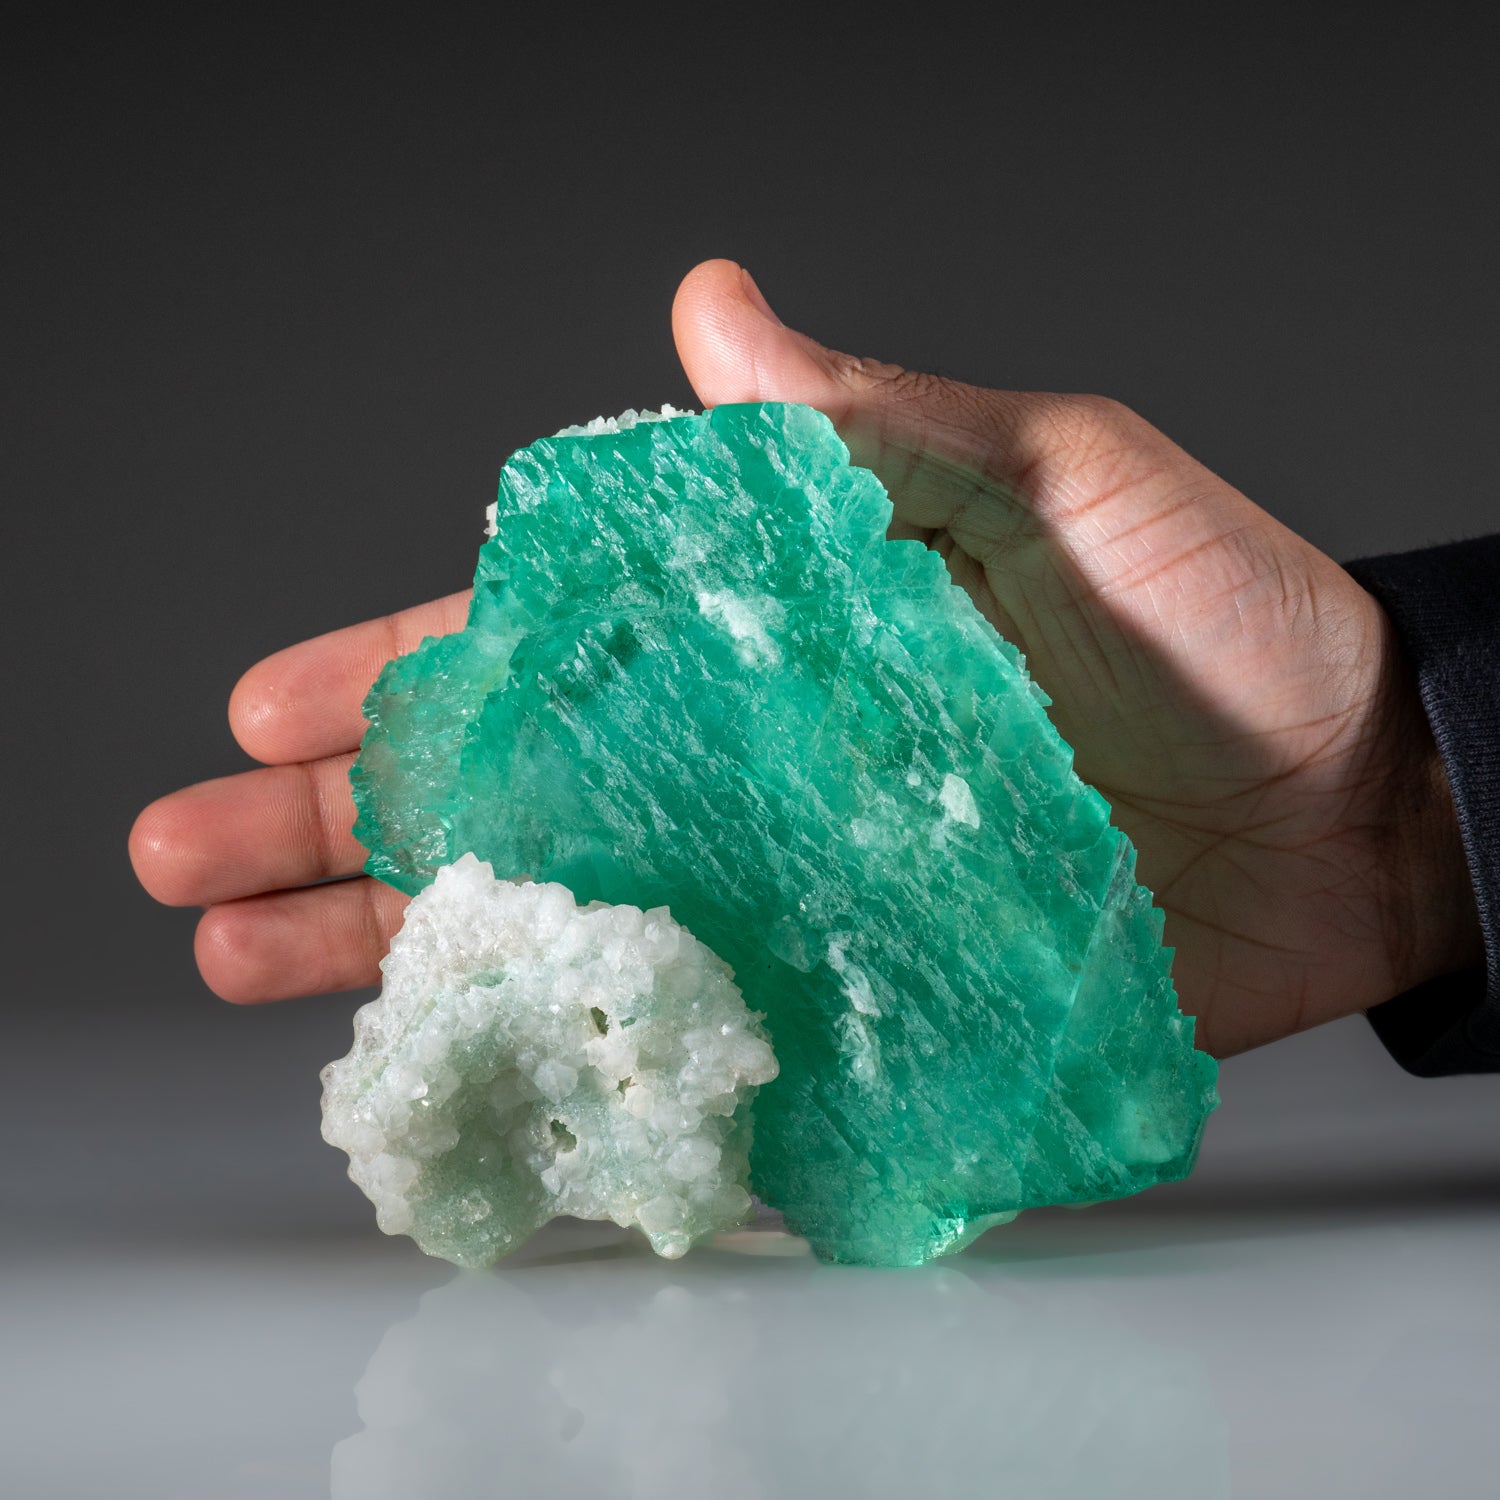 Green Fluorite with QUartz from Yaogangxian Mine, Nanling Mountains, Hunan Province, China